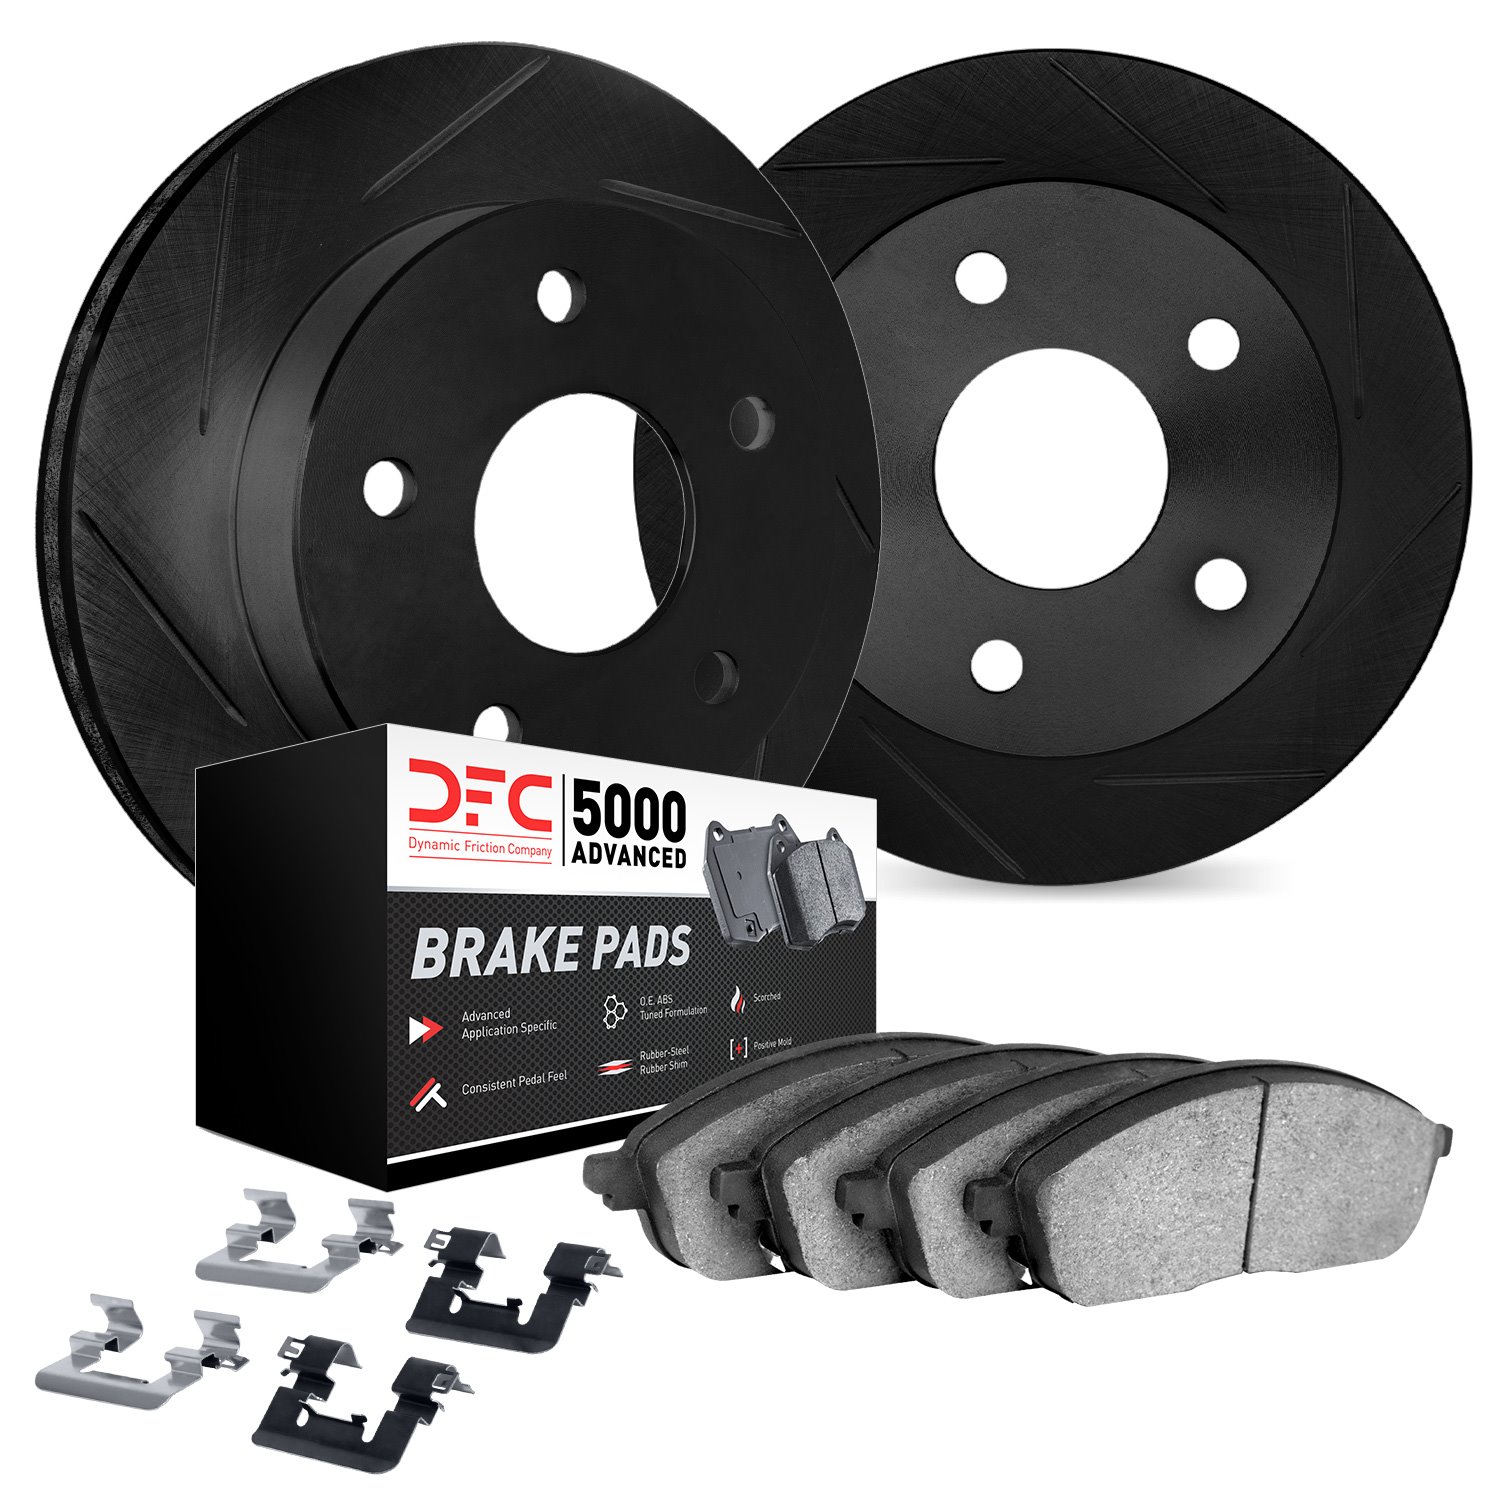 3512-55010 Slotted Brake Rotors w/5000 Advanced Brake Pads Kit & Hardware [Black], 2015-2020 Ford/Lincoln/Mercury/Mazda, Positio